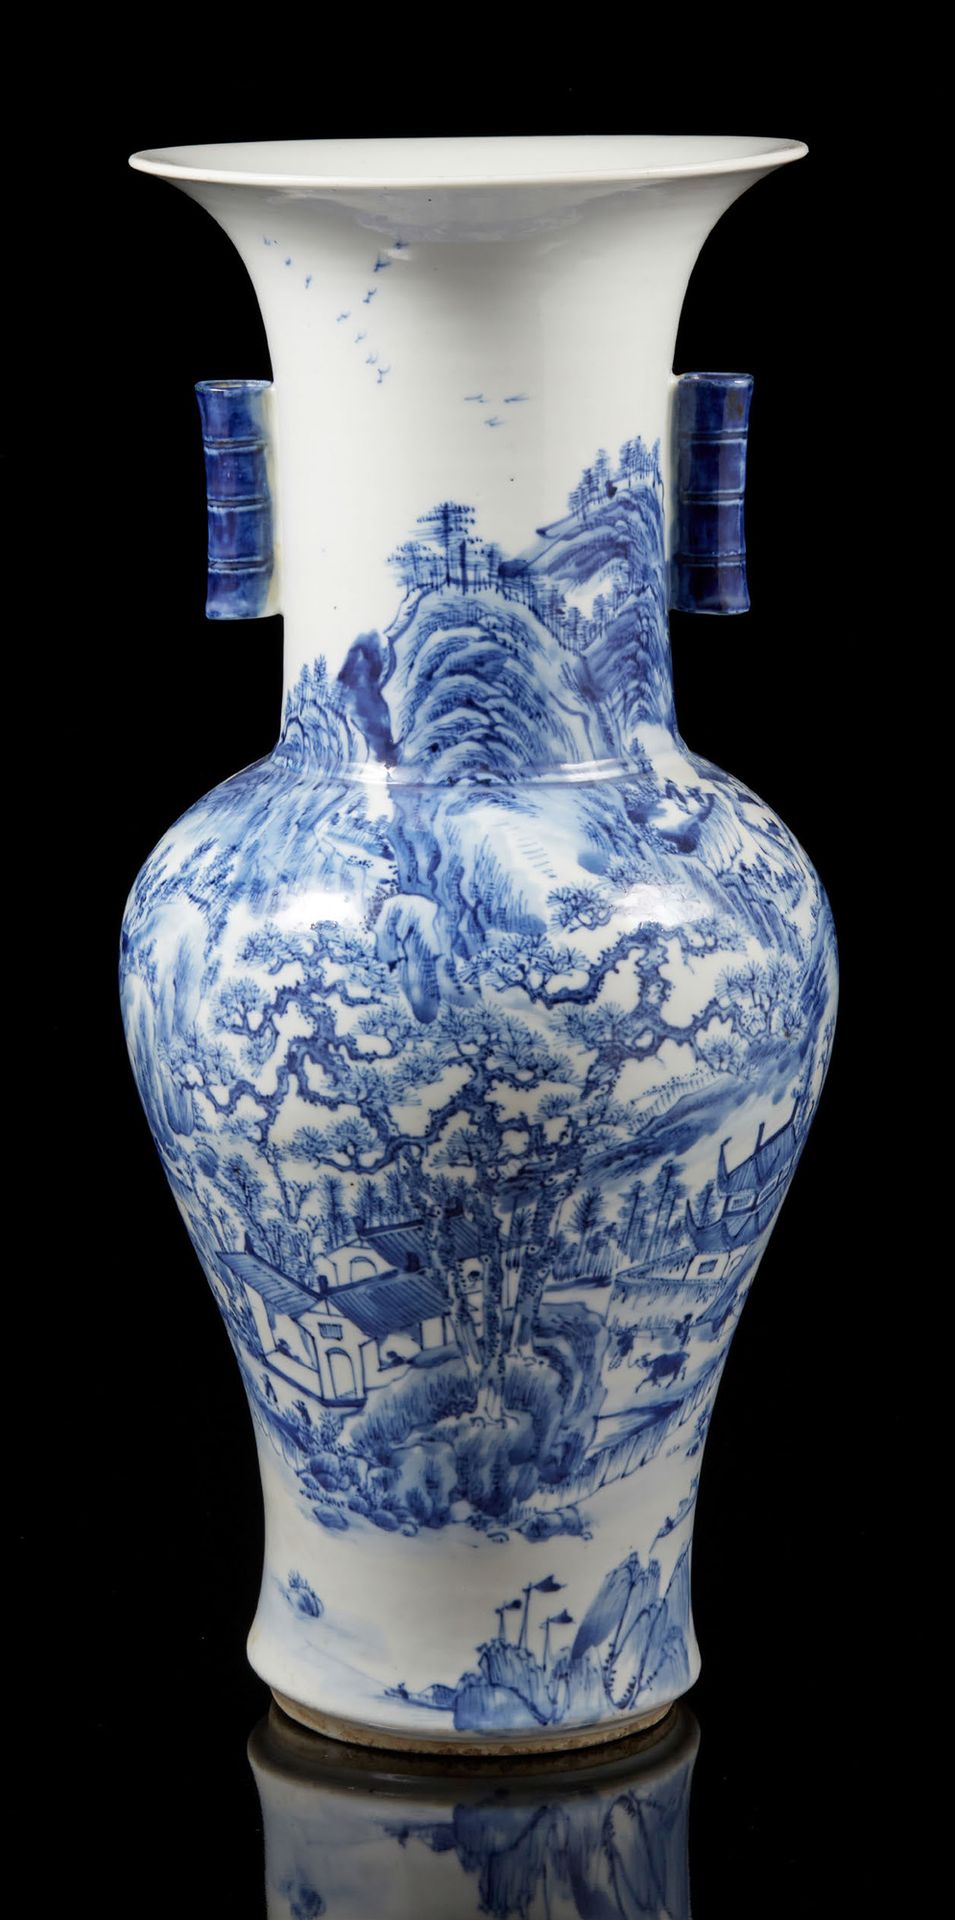 CHINE, XIXe siècle 一件青花瓷日元花瓶，装饰着被山峰环绕的河岸上的湖城。颈部装饰有两个竹柄。
底部有伪造的康熙款。
H.46厘米。